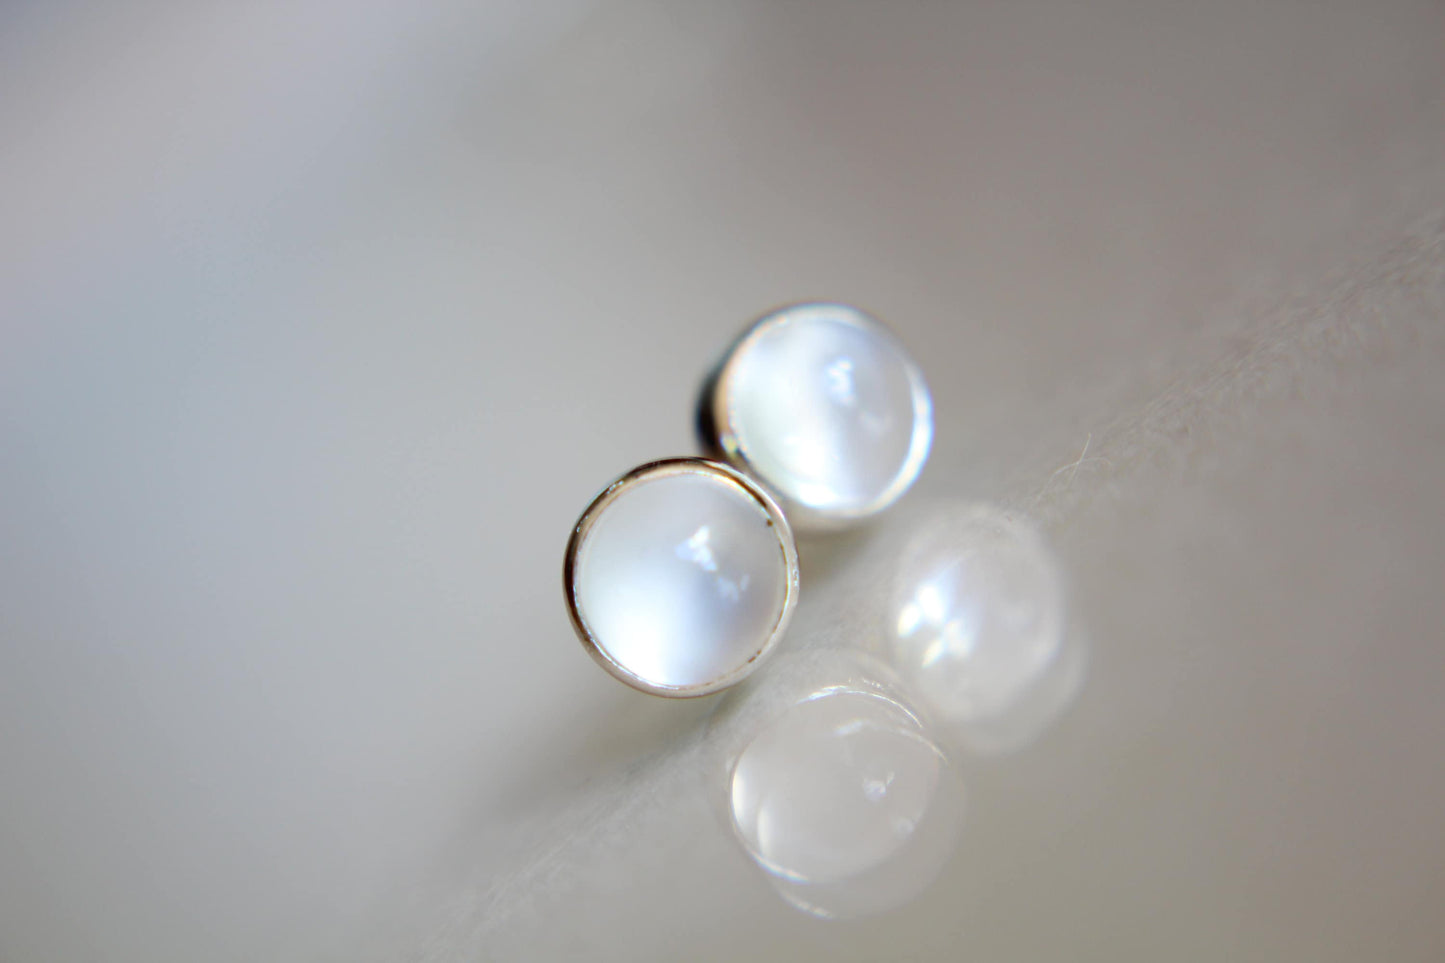 Moonstone Earrings, Stud Earrings, Silver Earrings, Simple White Moonstone Earrings, Gemstone Earrings, 5mm Moonstone Earrings, White, Gift